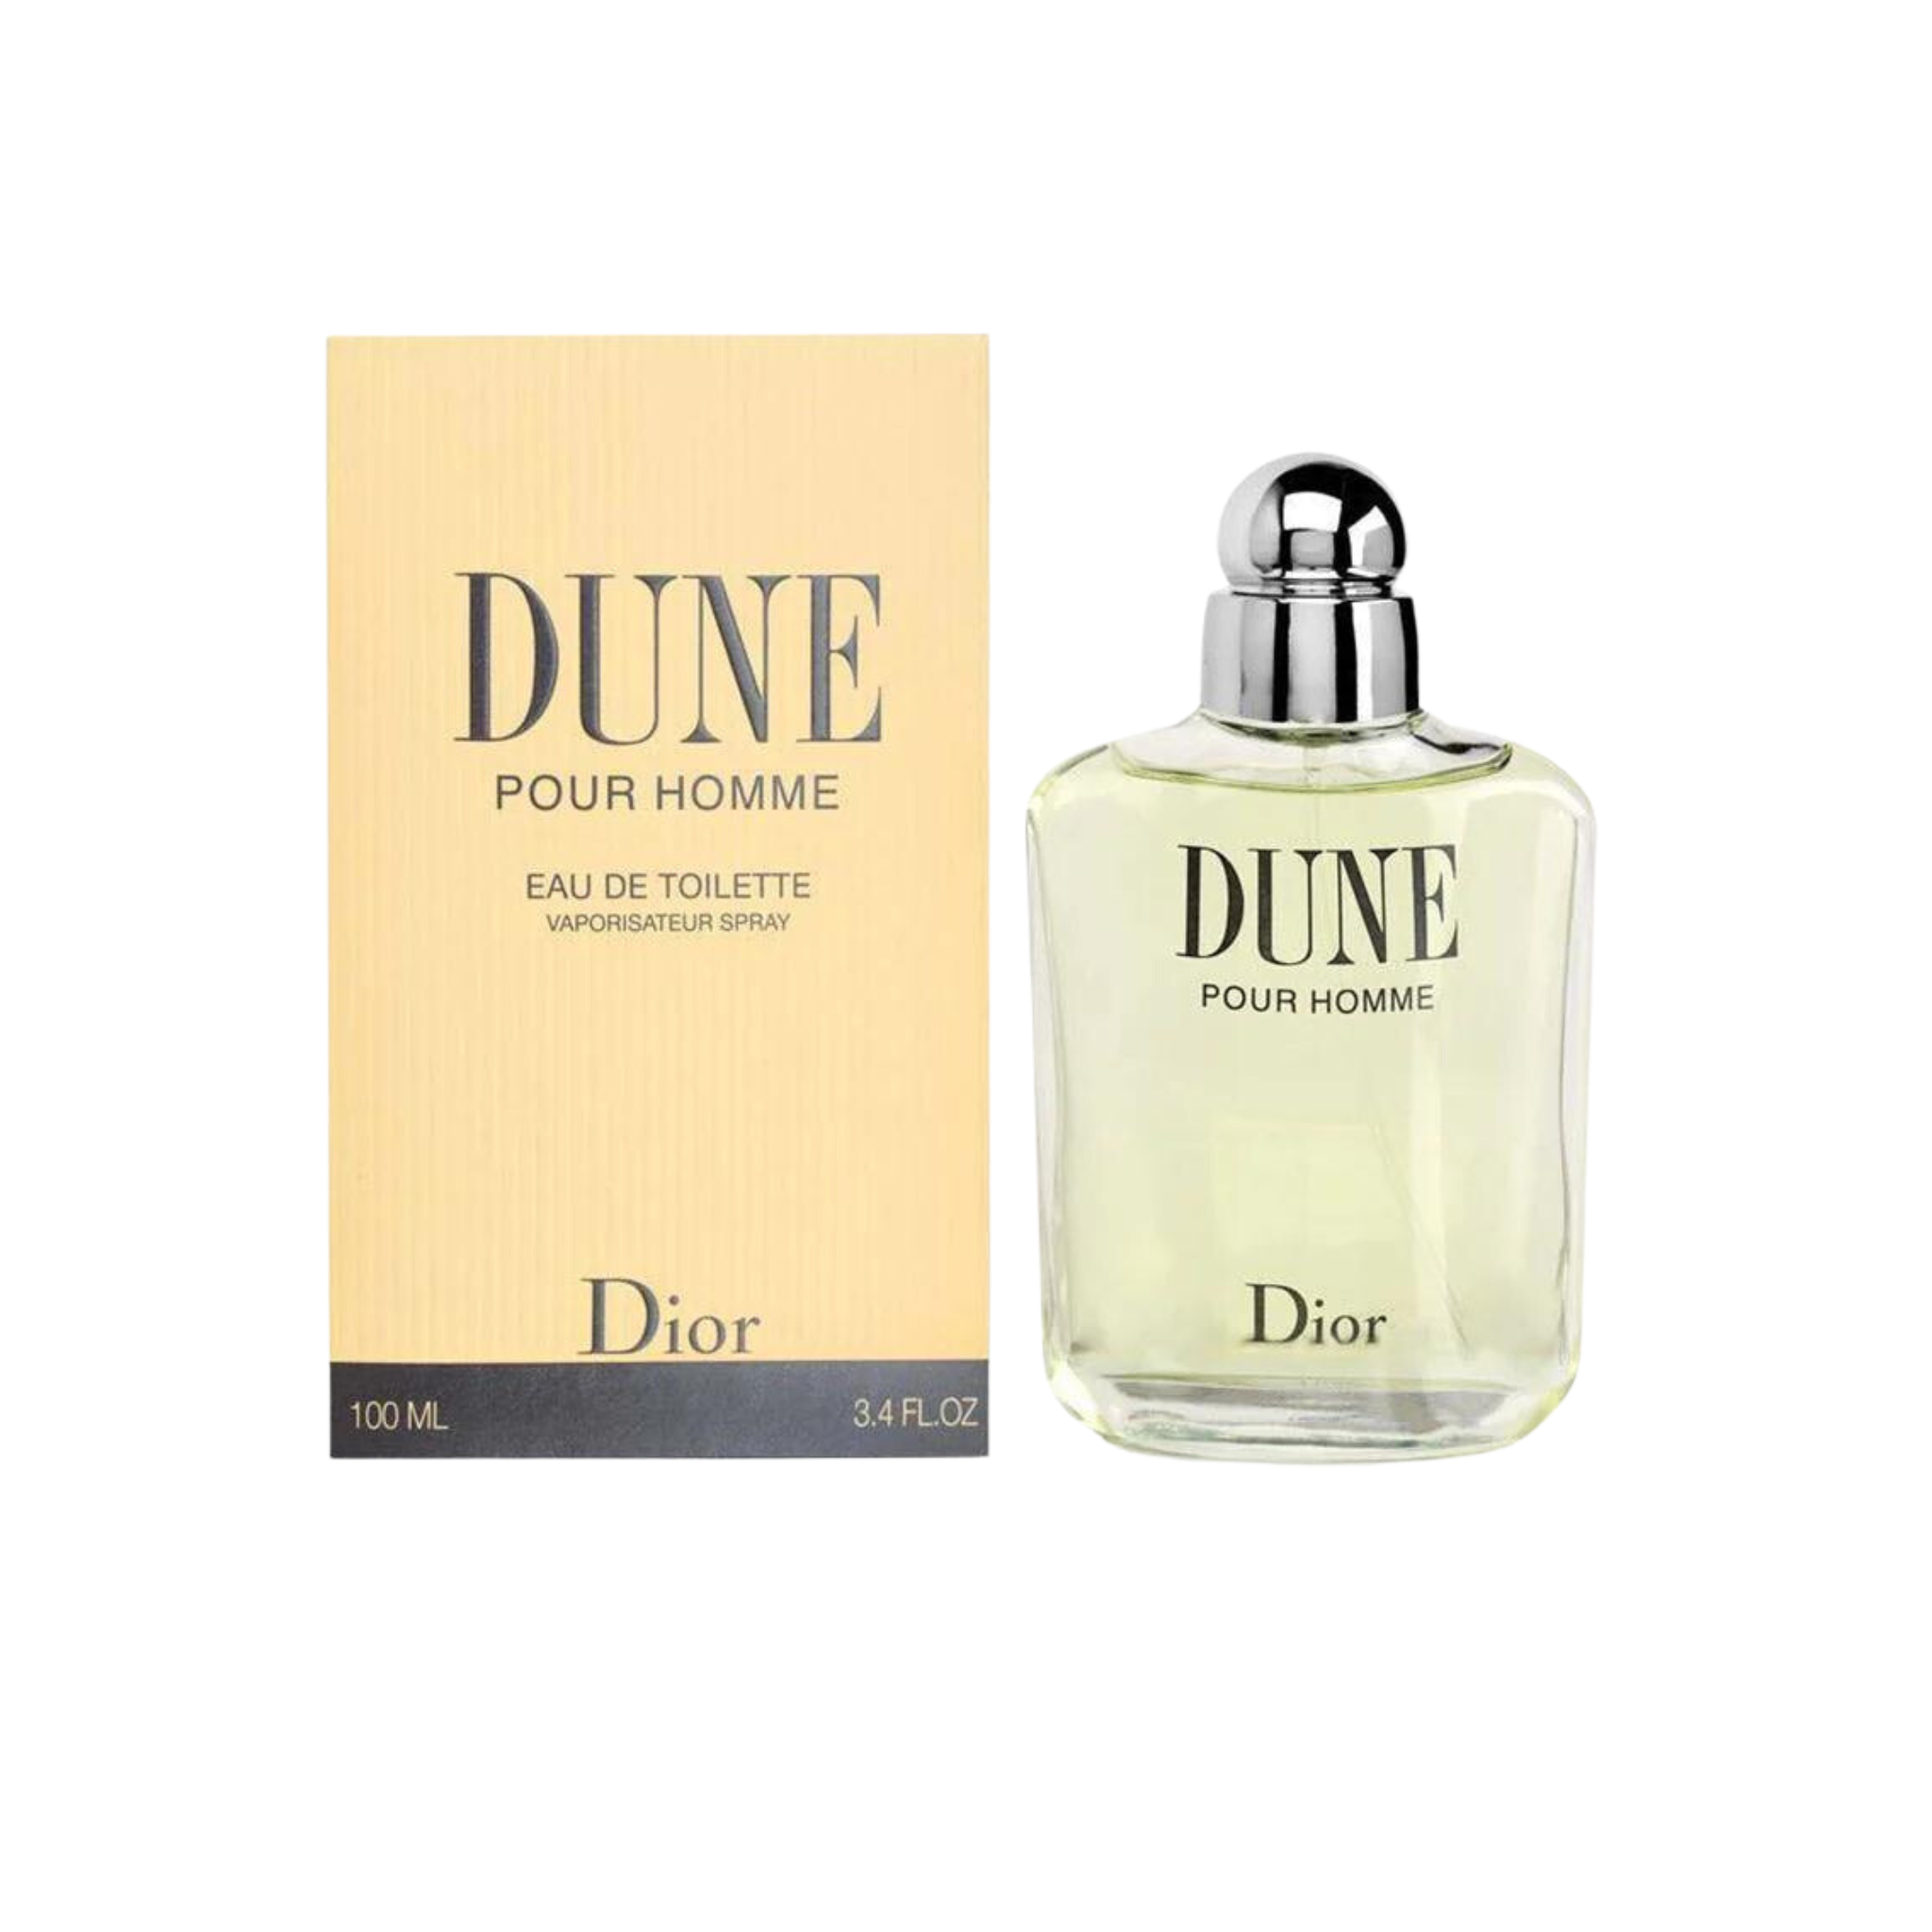 Christian Dior Dune Eau de Toilette  Perfume Review  Perfume Collection  2021  YouTube